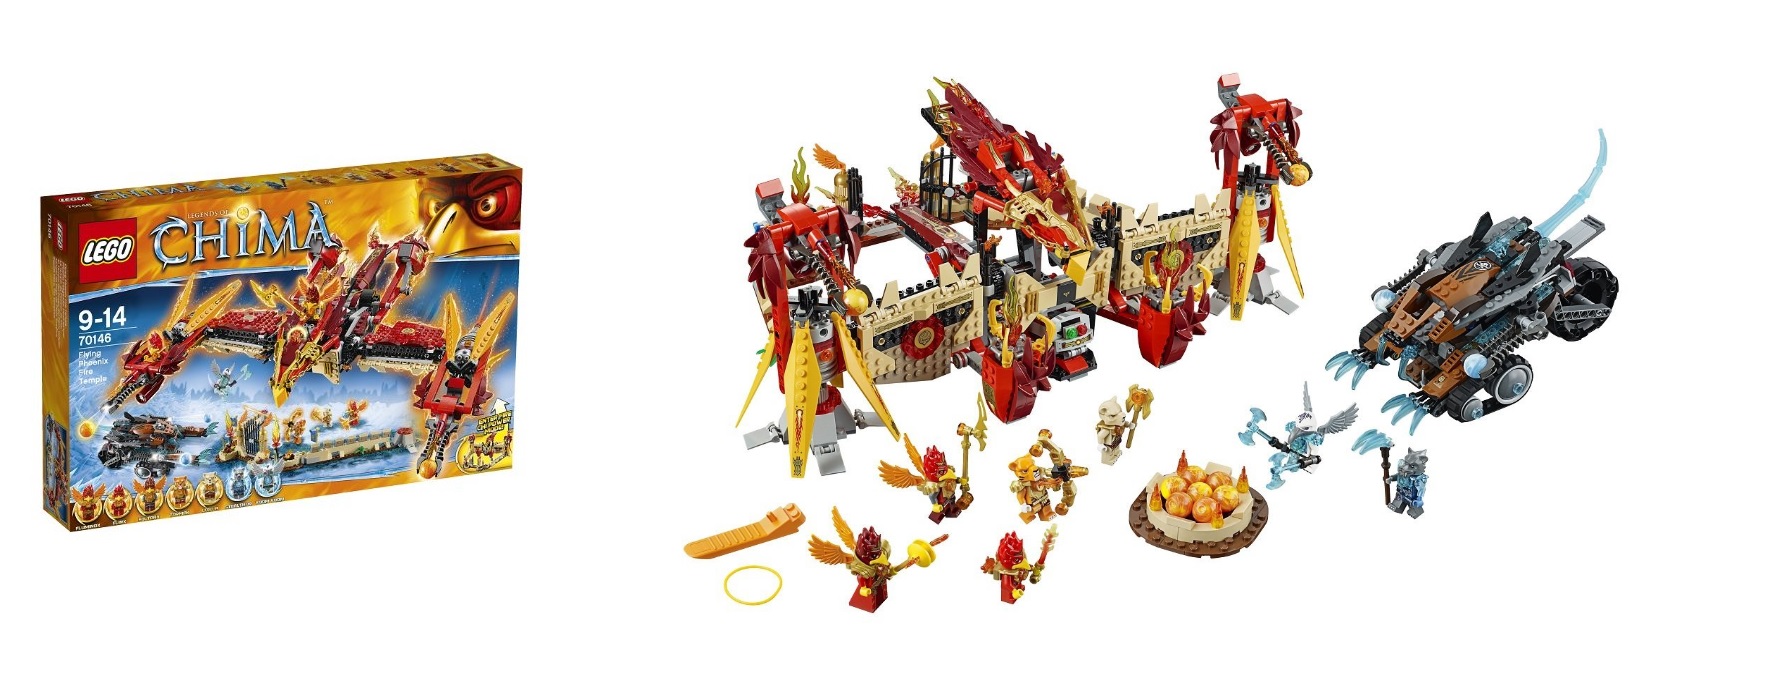 Chima LEGO 2014 Sets: 70146 70145 70144 70143 - Toys N Bricks